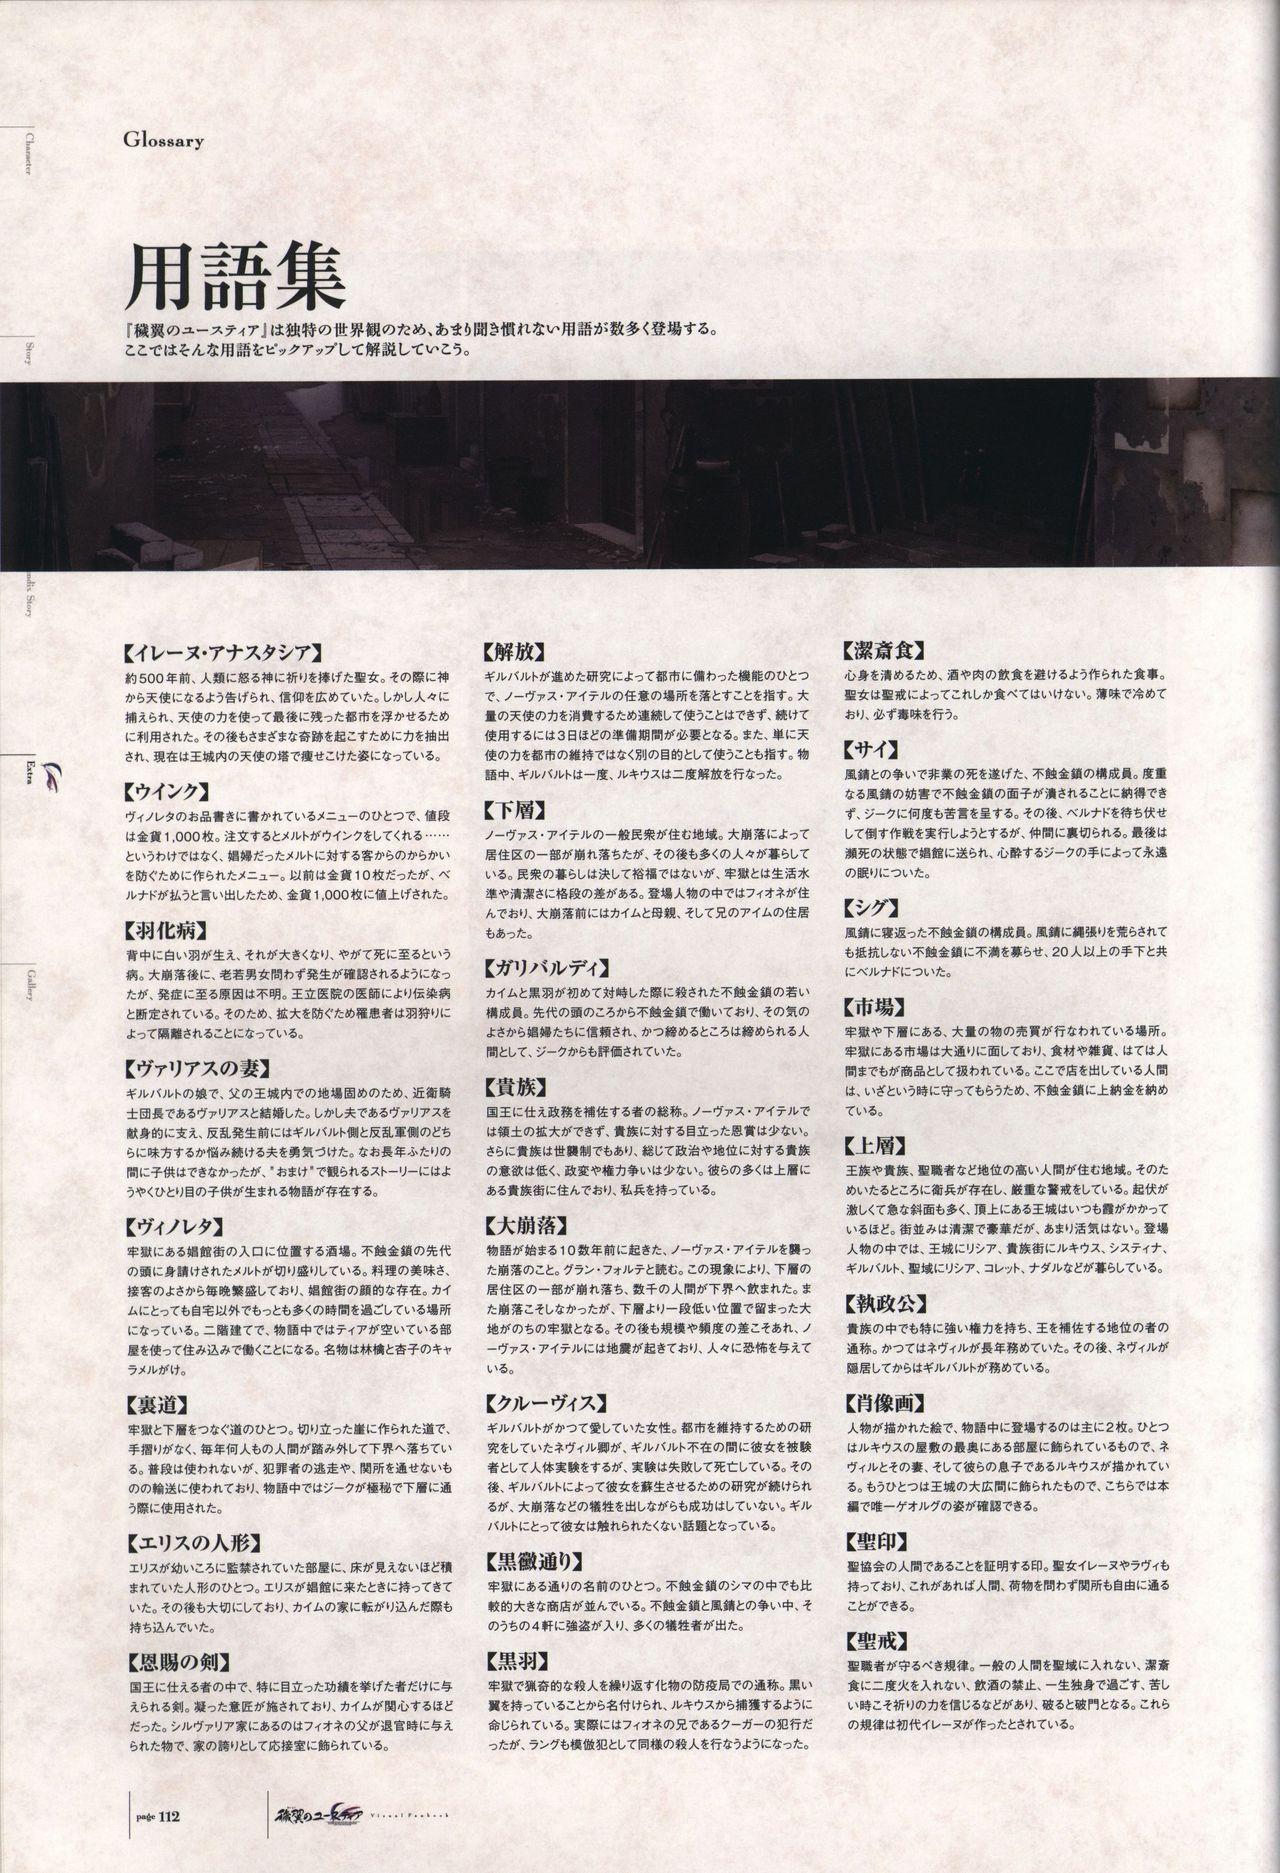 Aiyoku no Eustia VISUAL FANBOOK 112